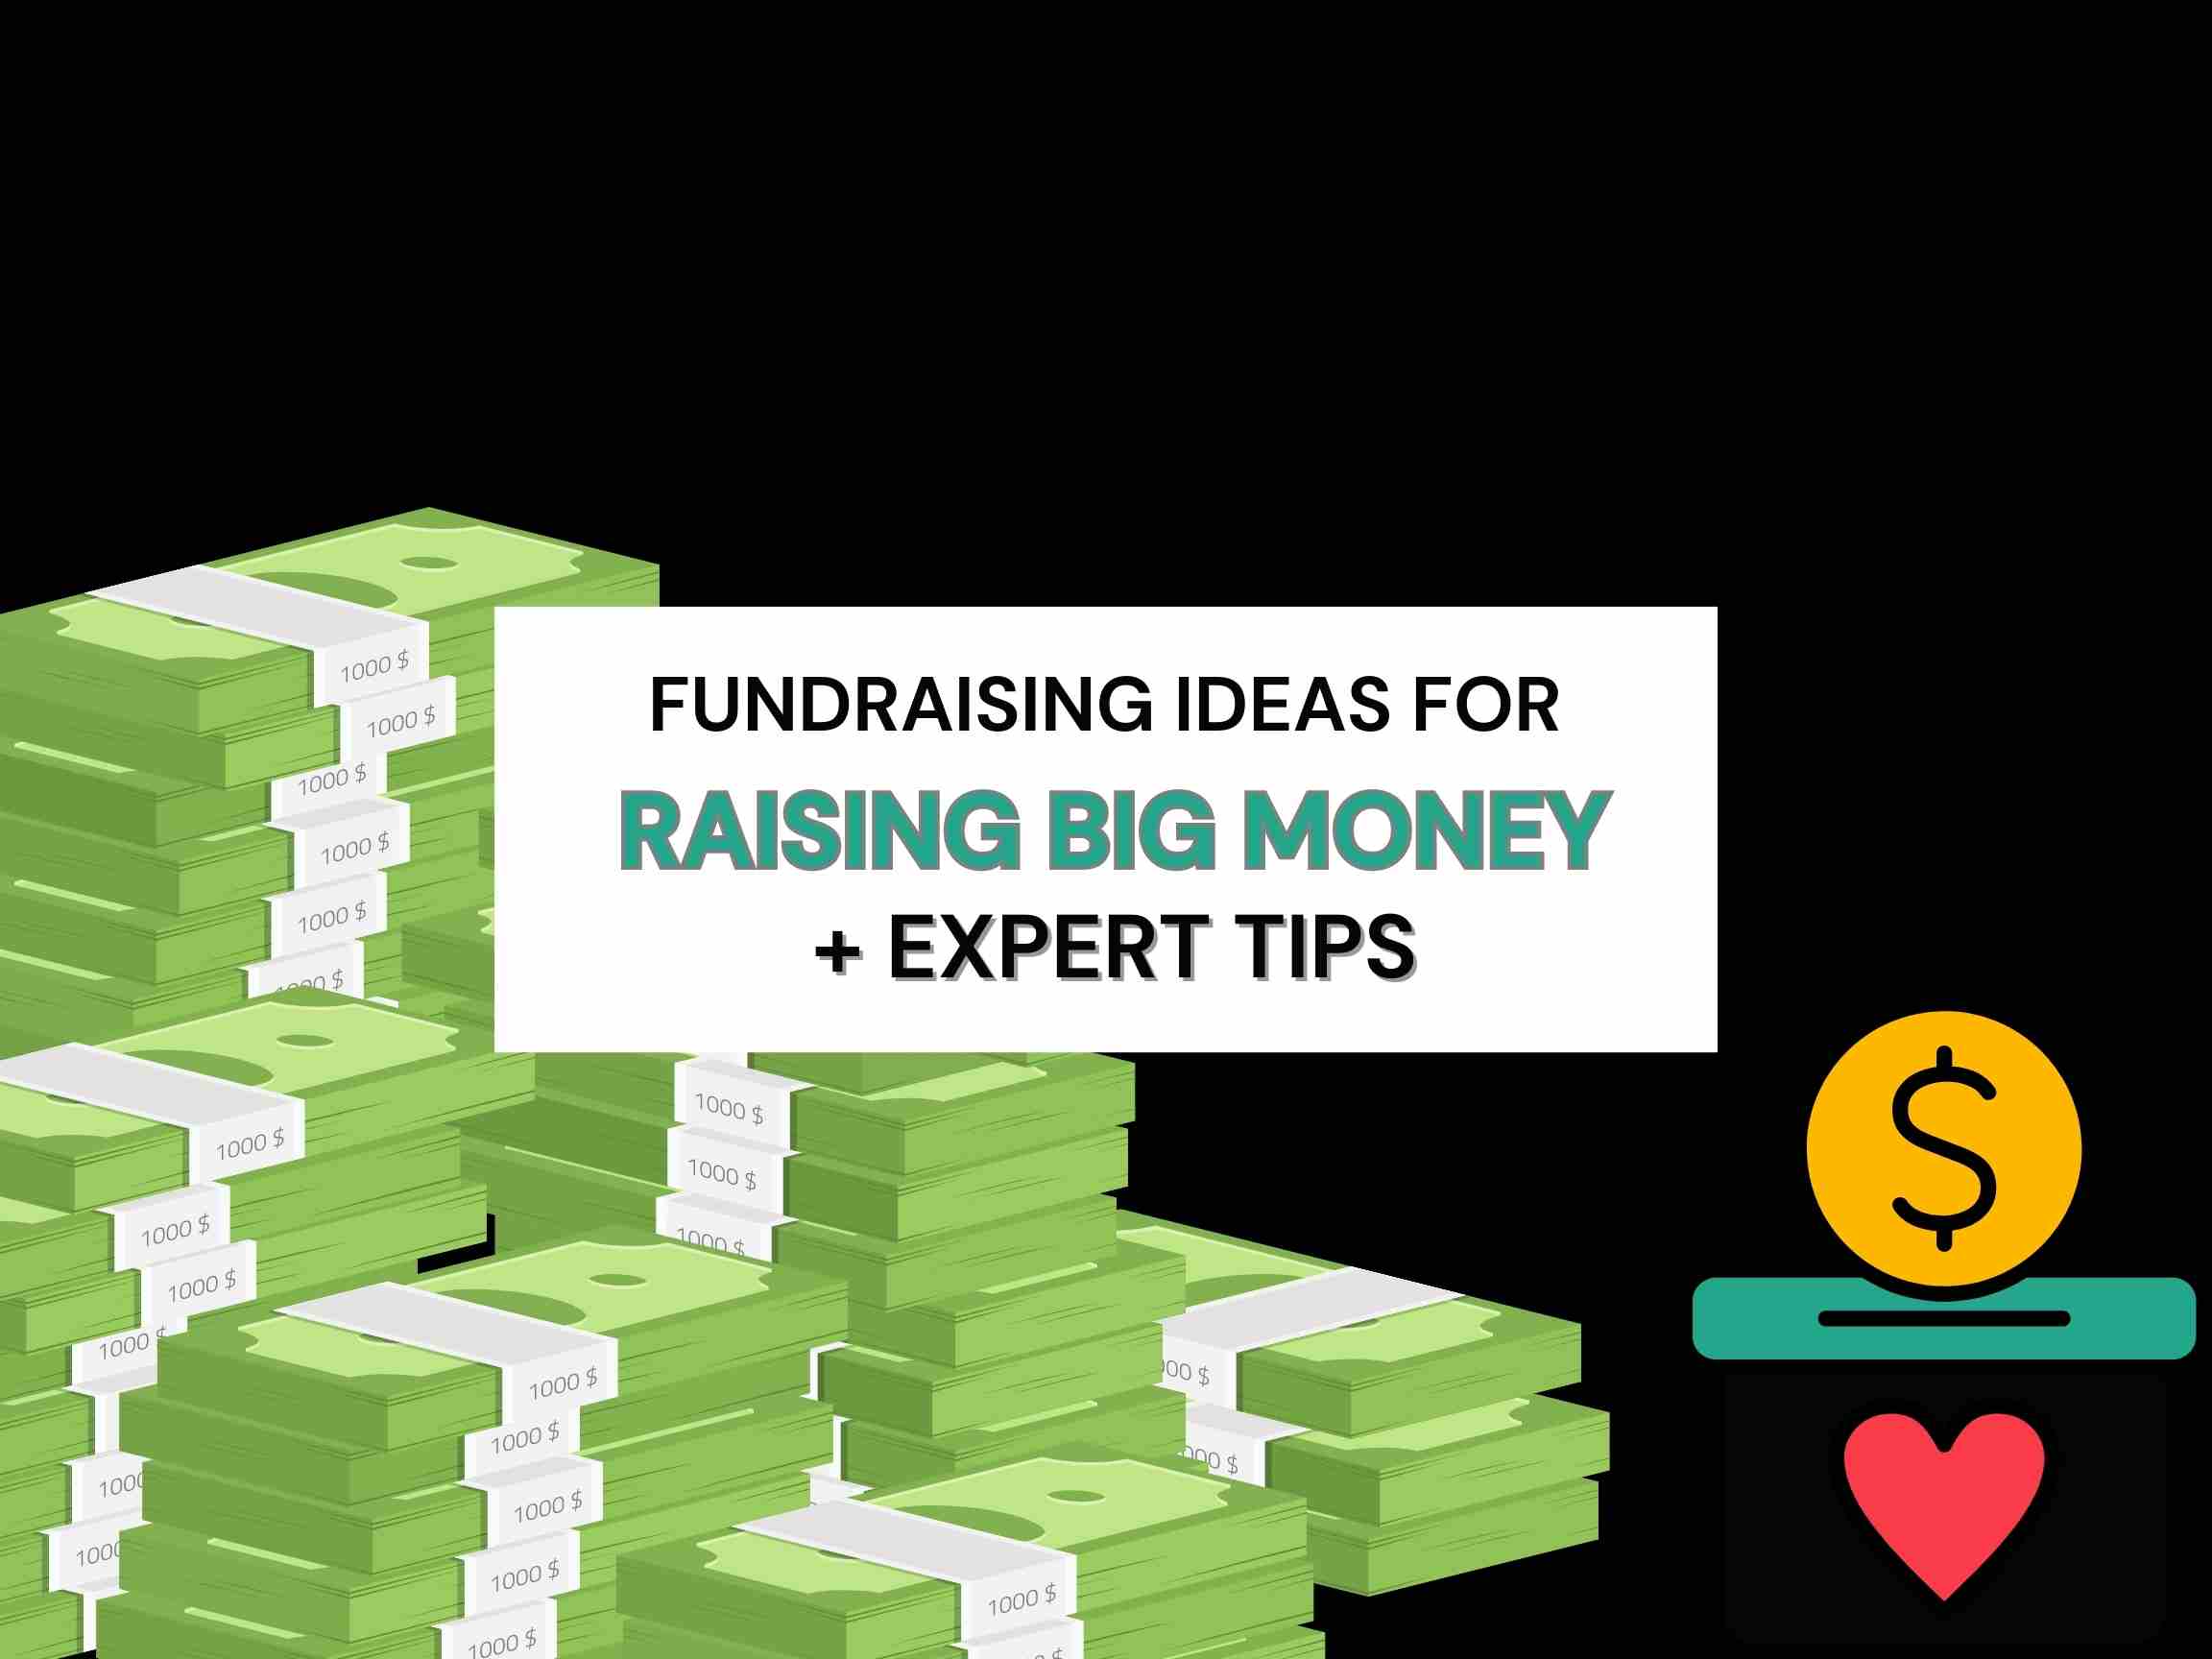 Big money fundraising ideas